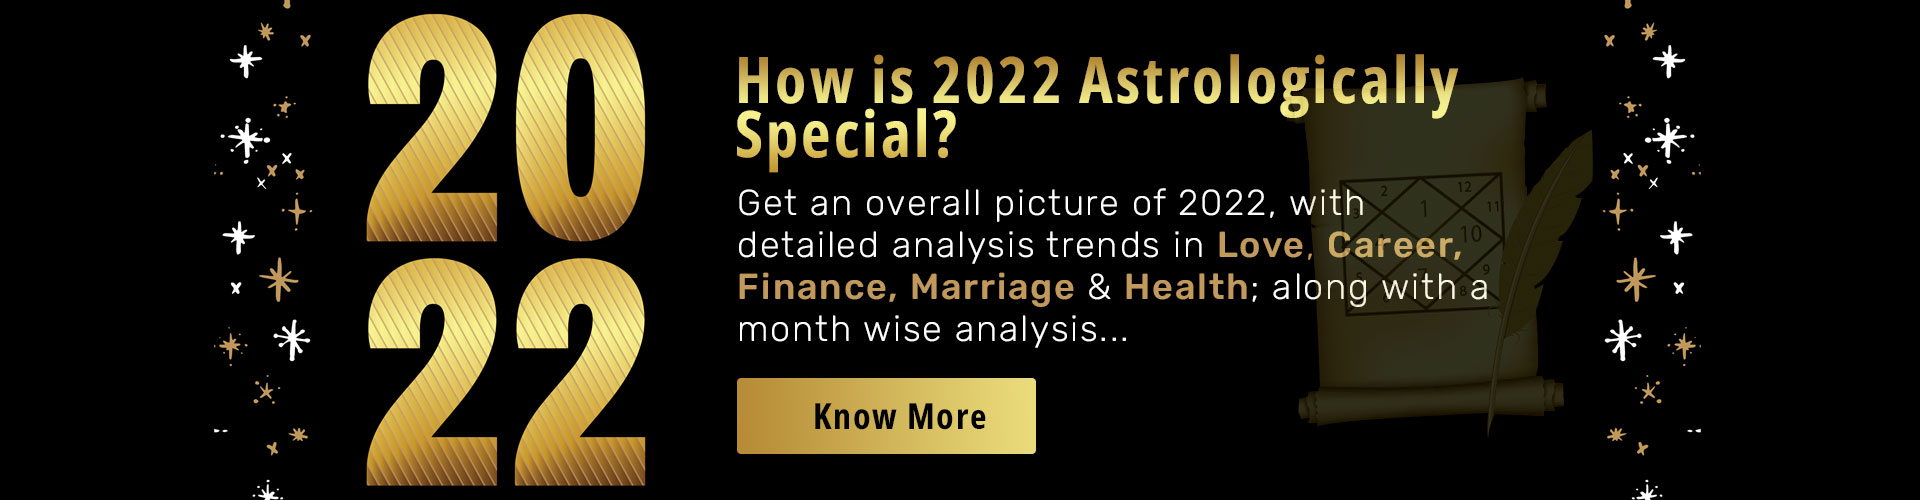 true astrology software download free